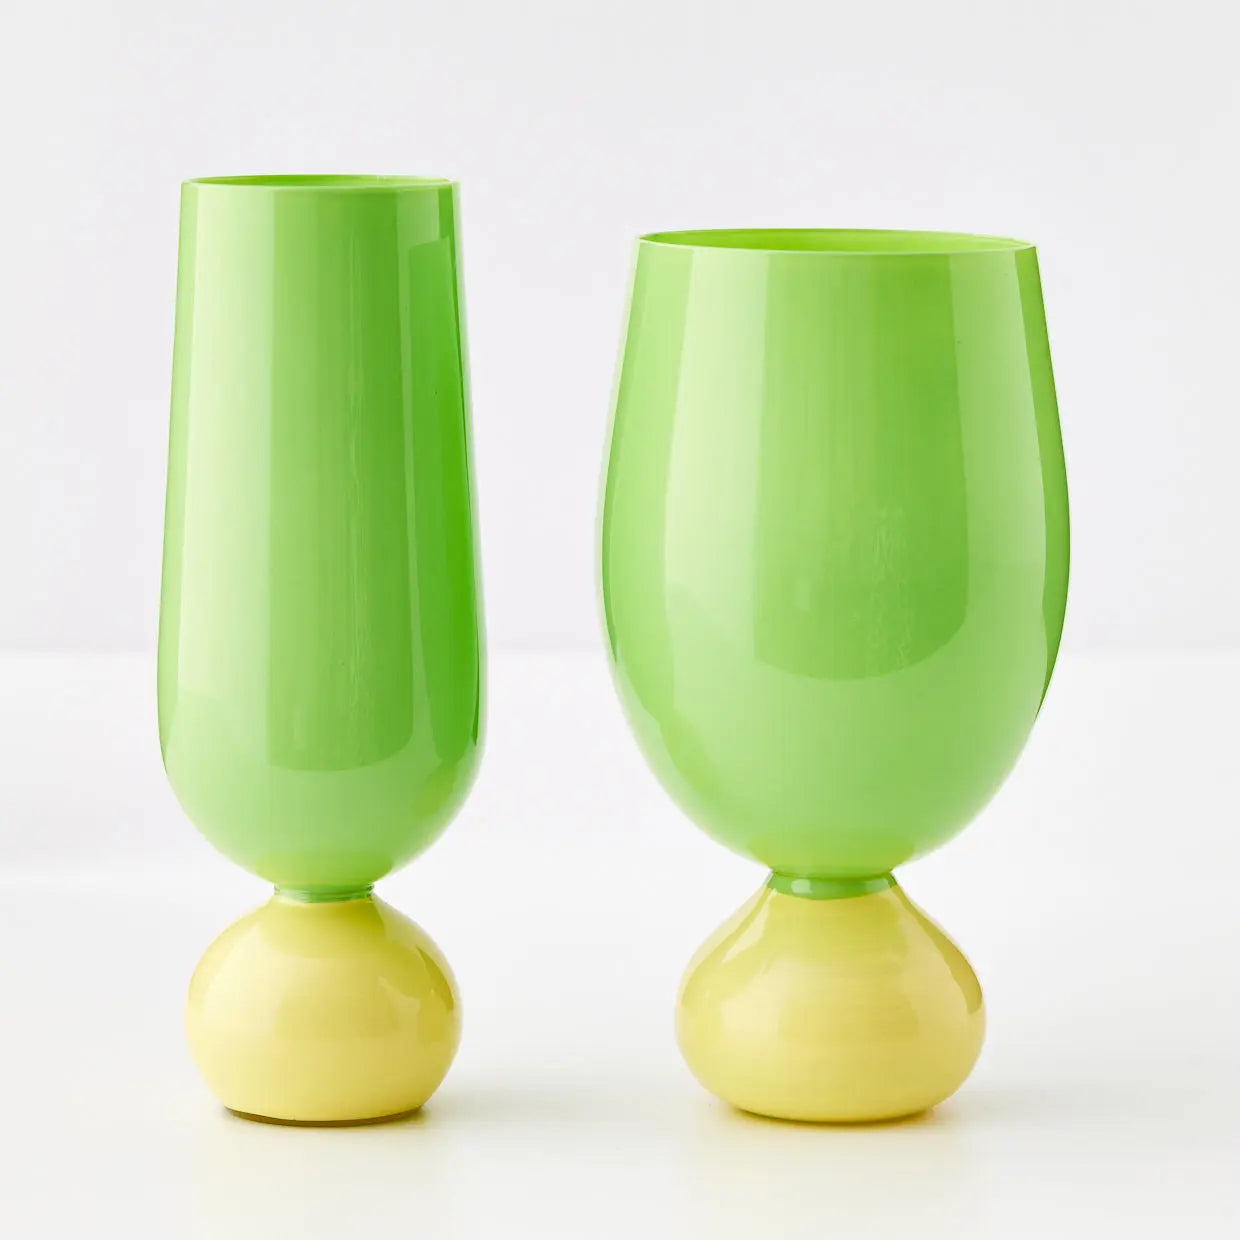 Aden Wine Glass Green - GigiandTom